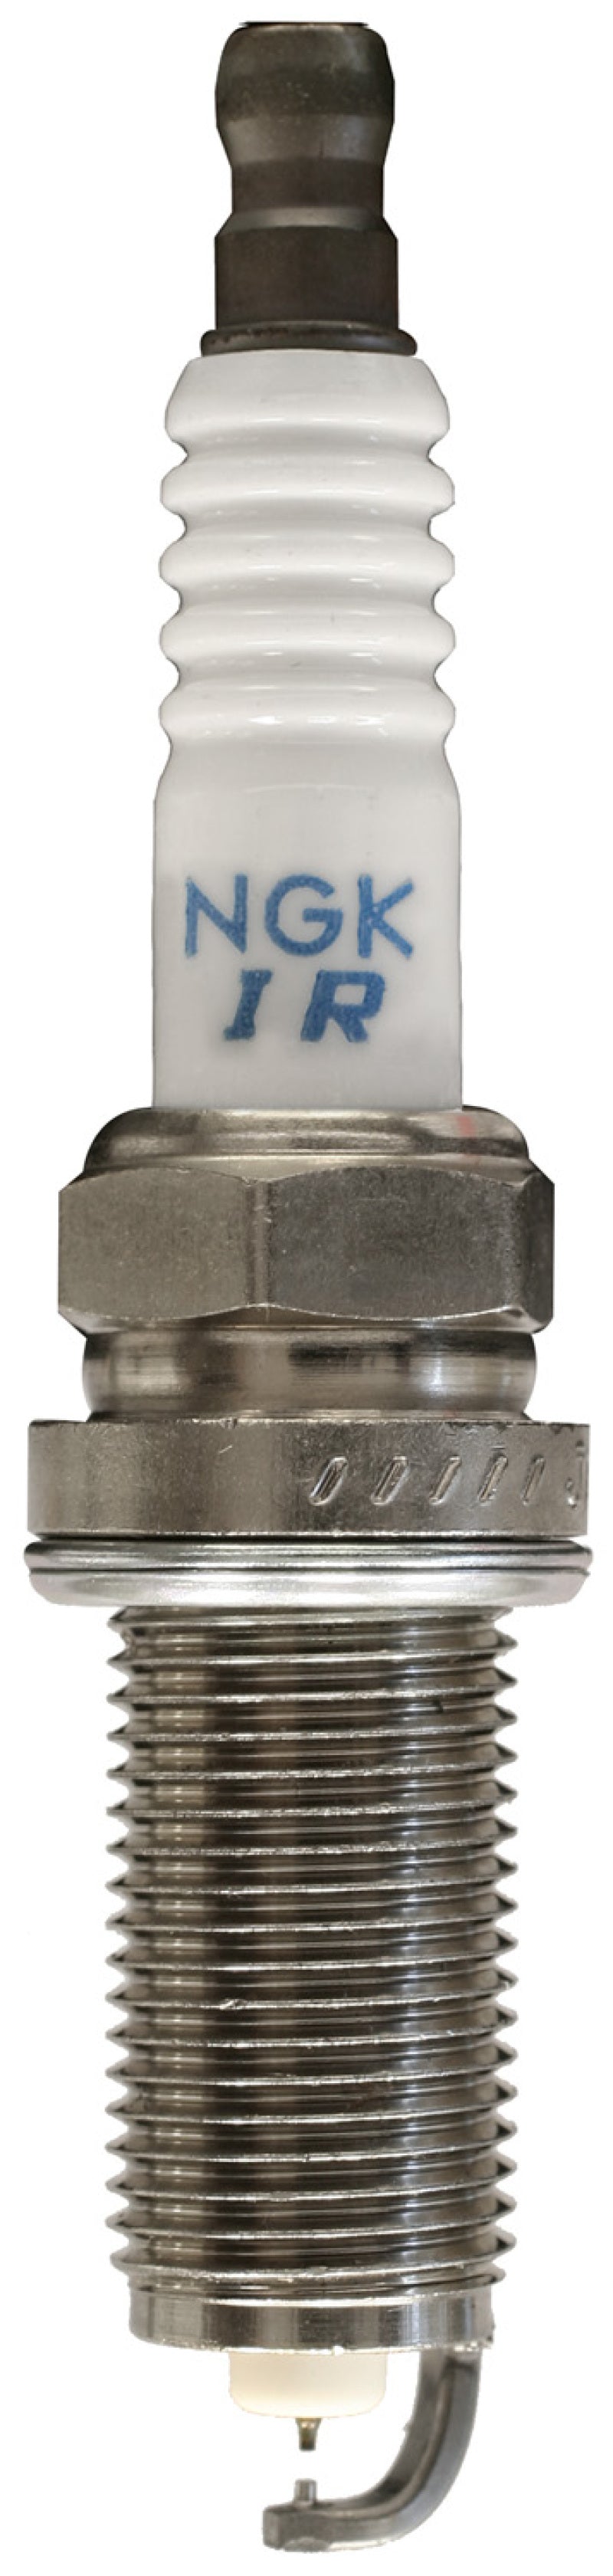 NGK Laser Iridium Spark Plug Box of 4 (DILFR5A-11D)